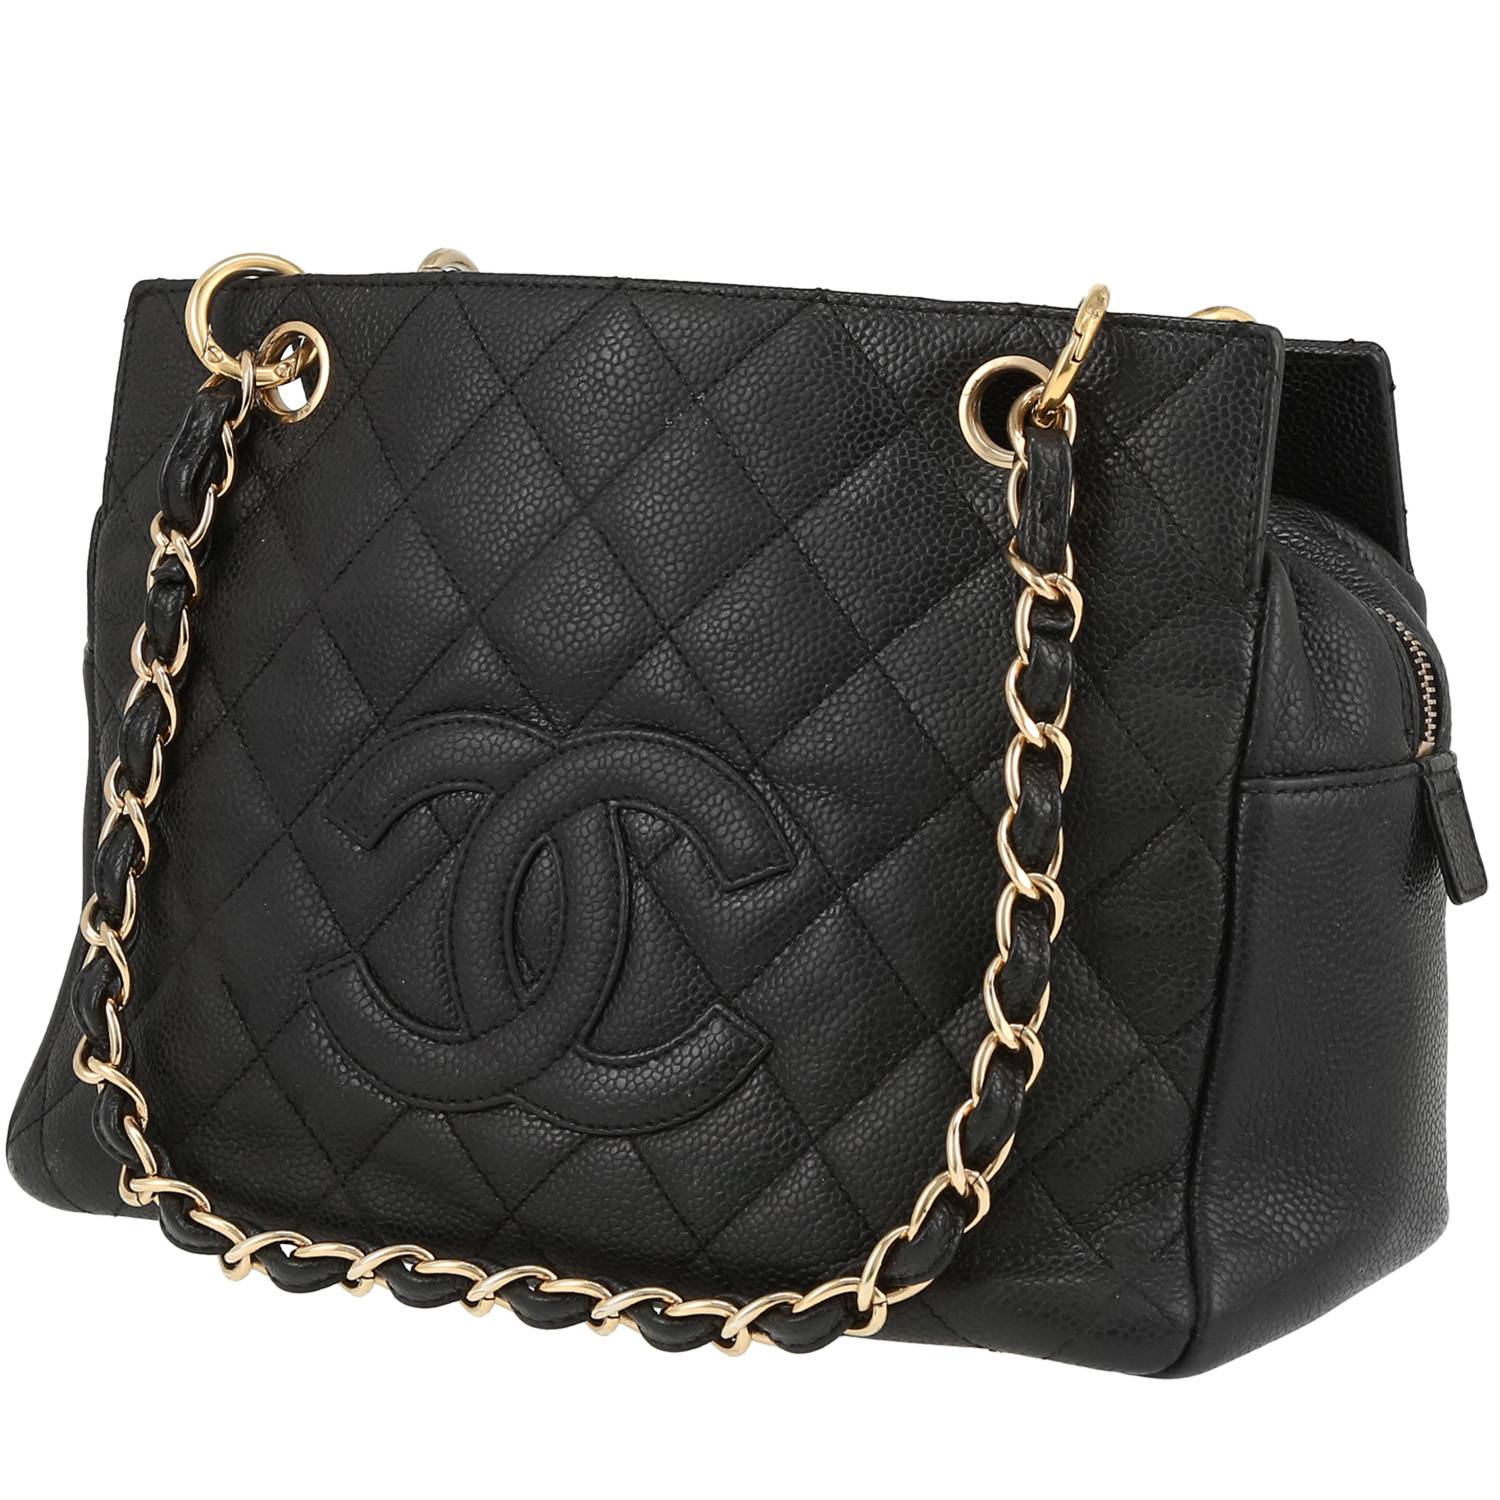 Chanel Chanel Shopping Handbag 406464 | Collector Square